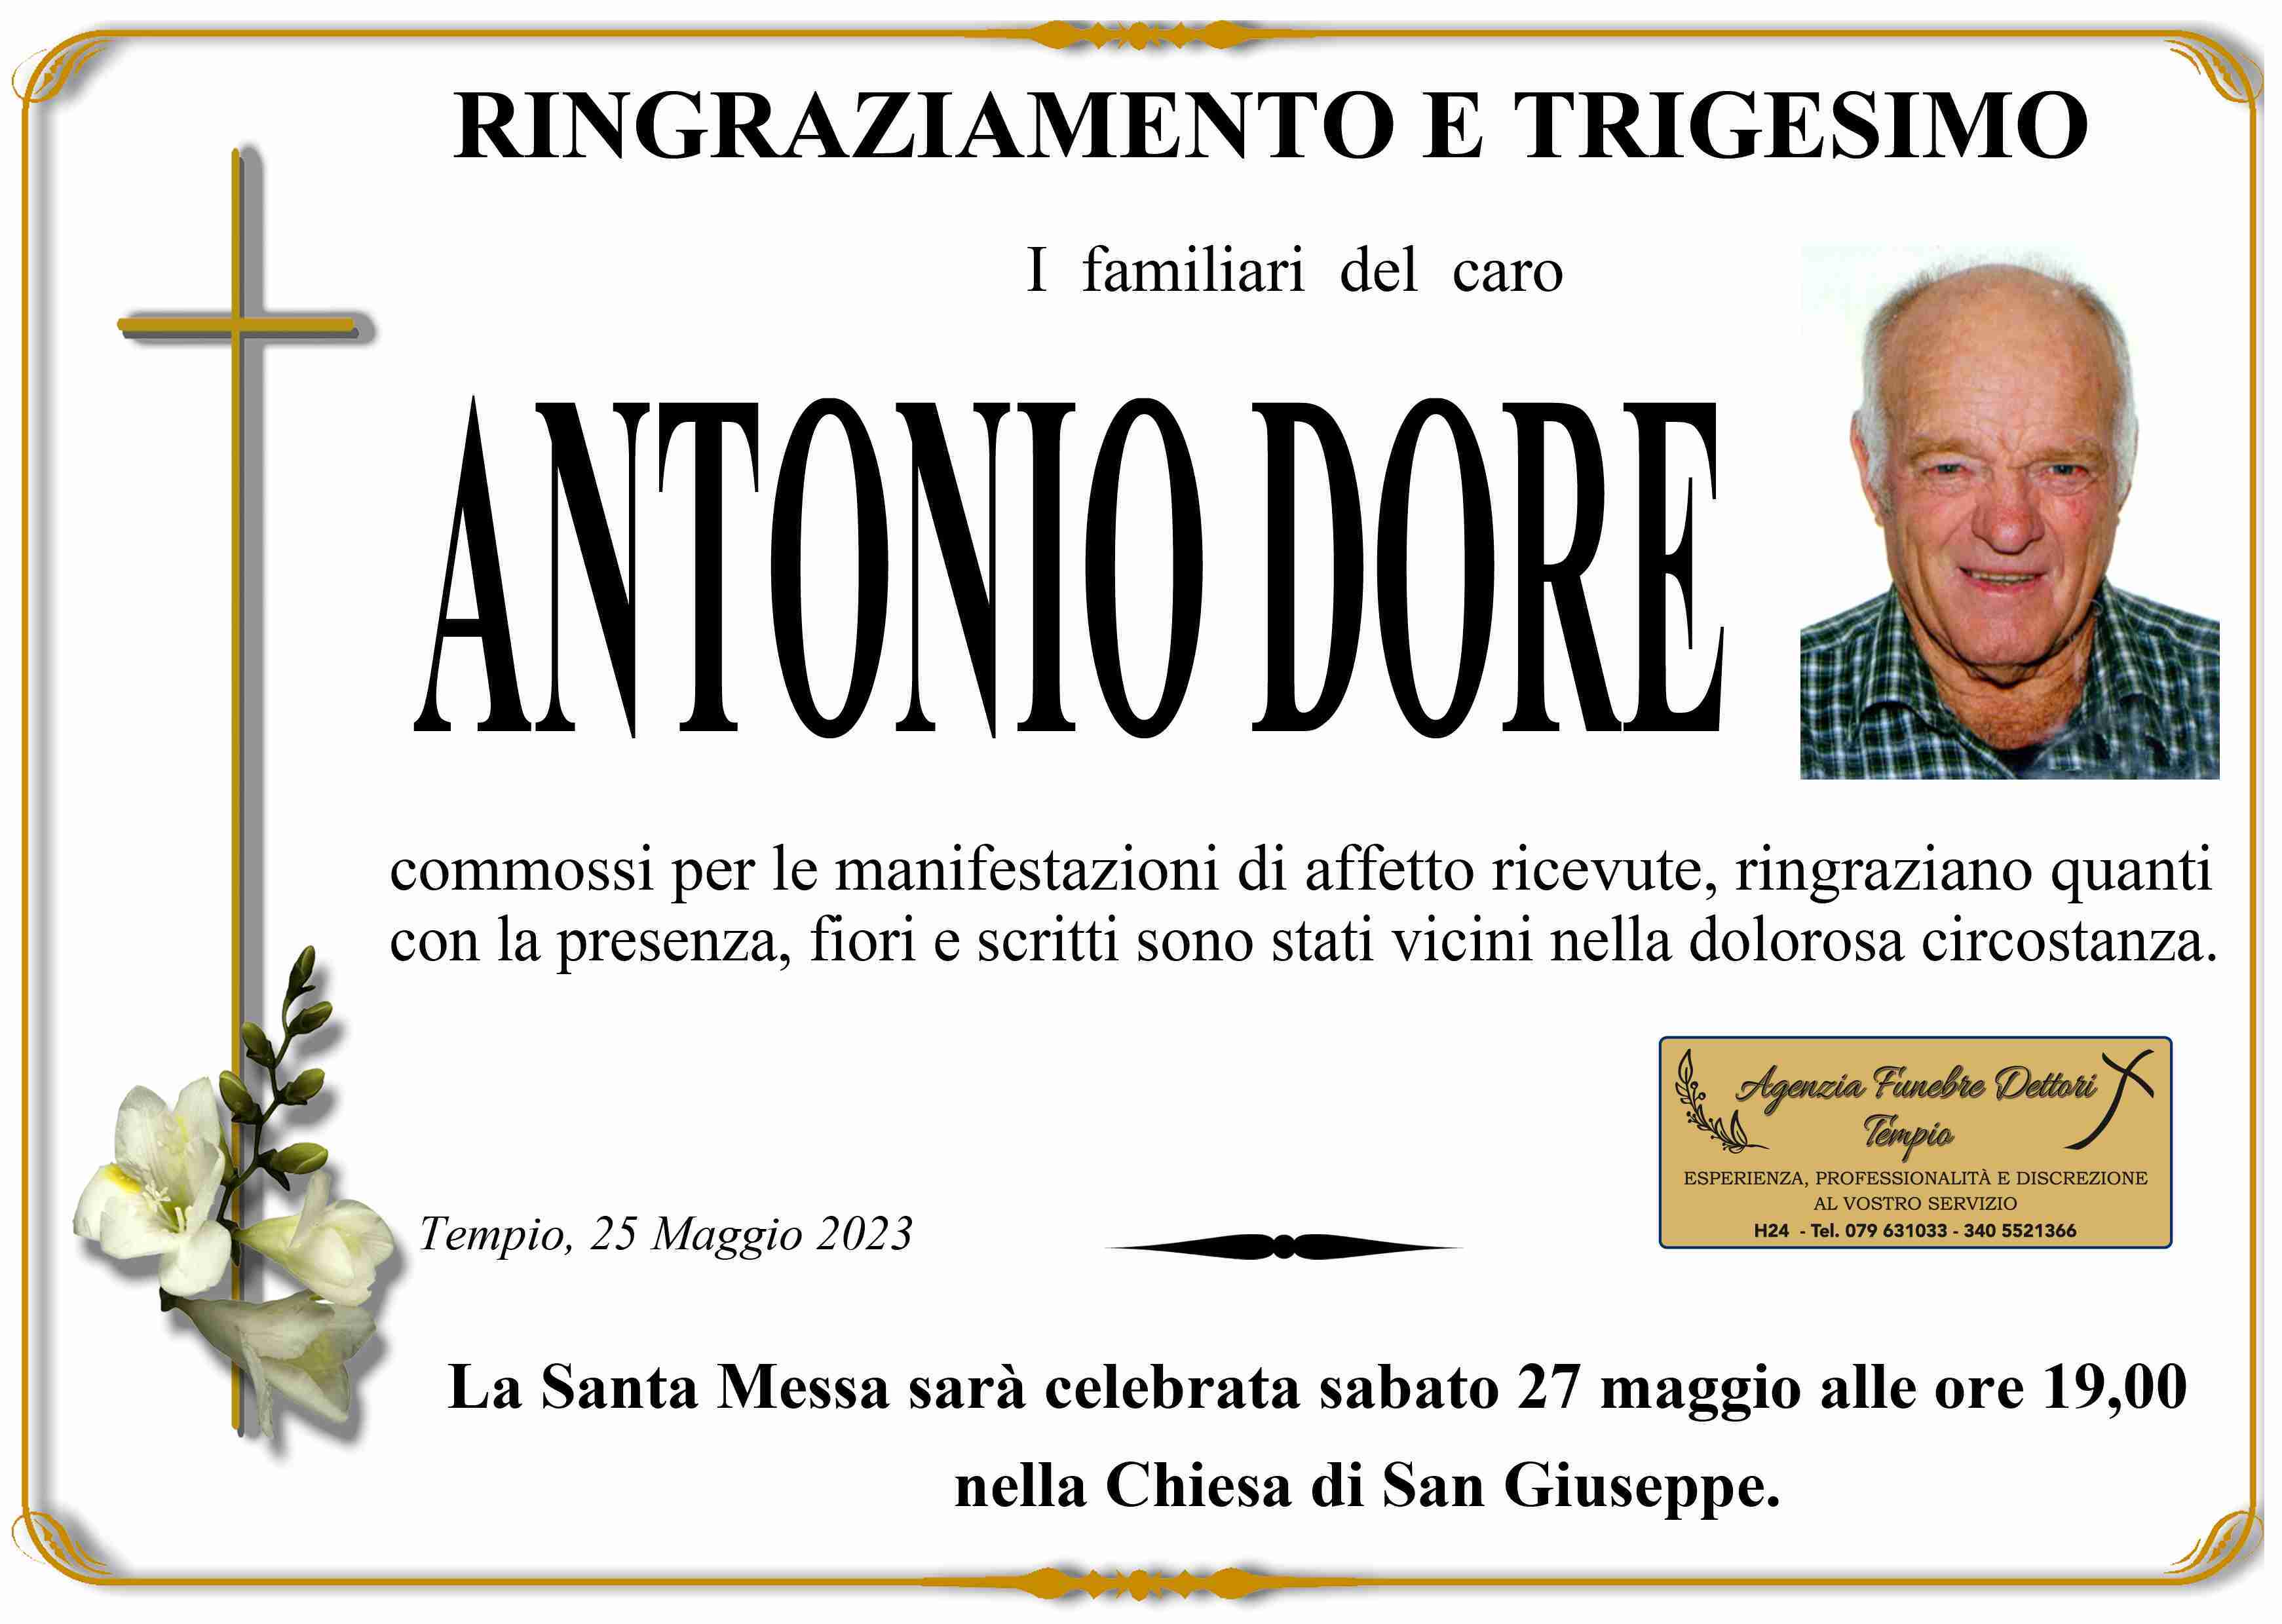 Antonio Dore